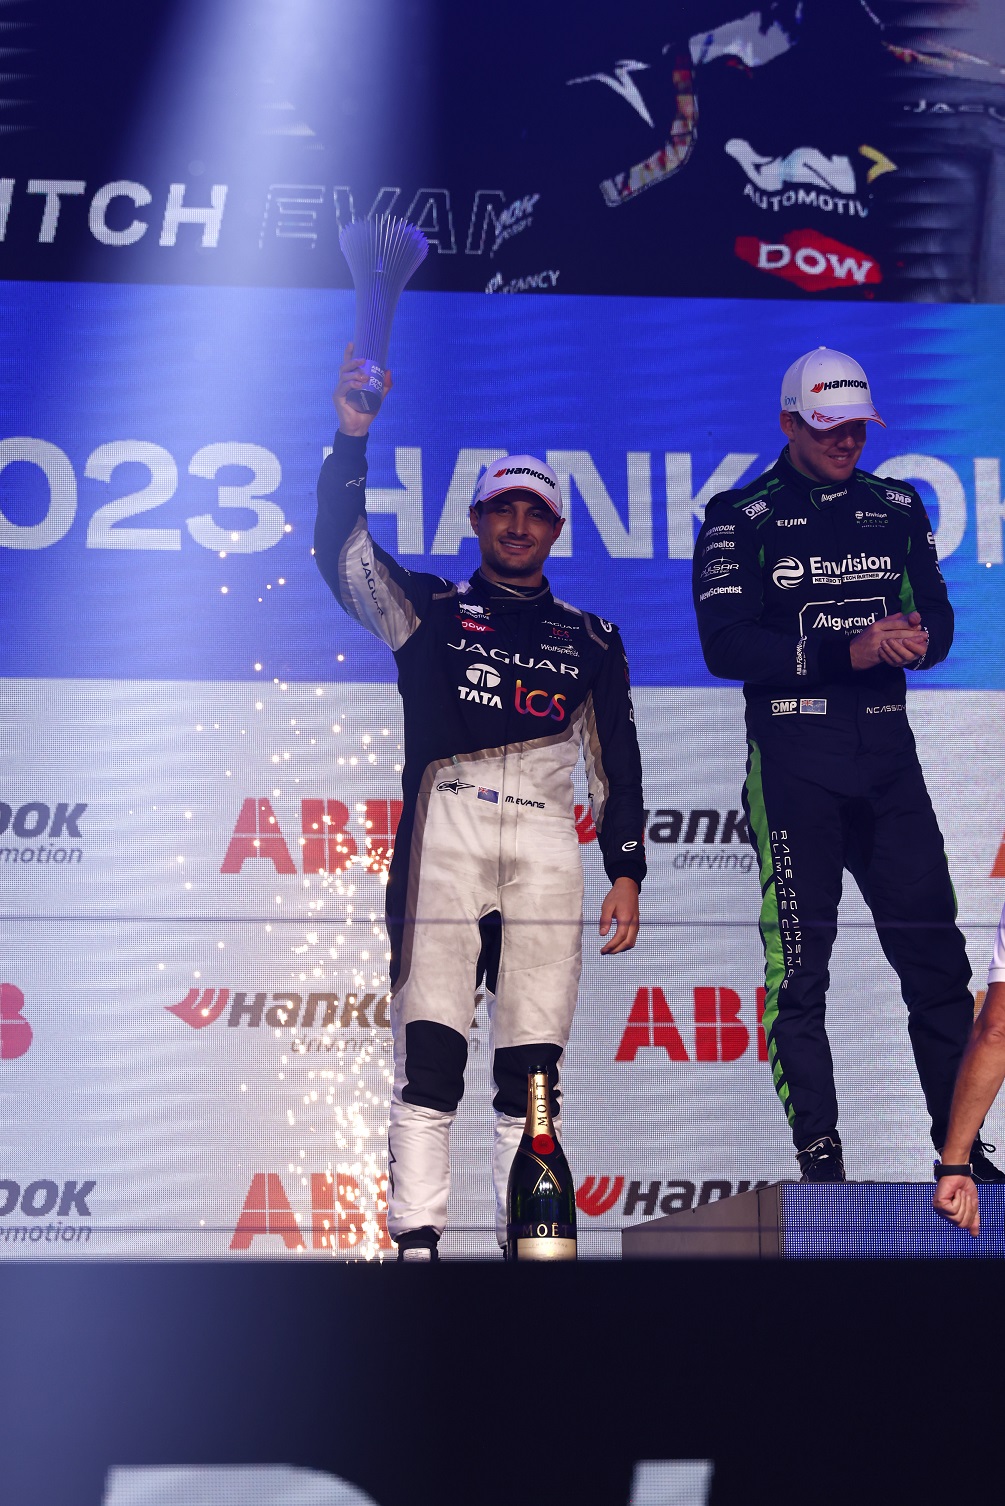 Jaguar TCS racing finish runners-up in the 2023 ABB FIA Formula E World Championship in London